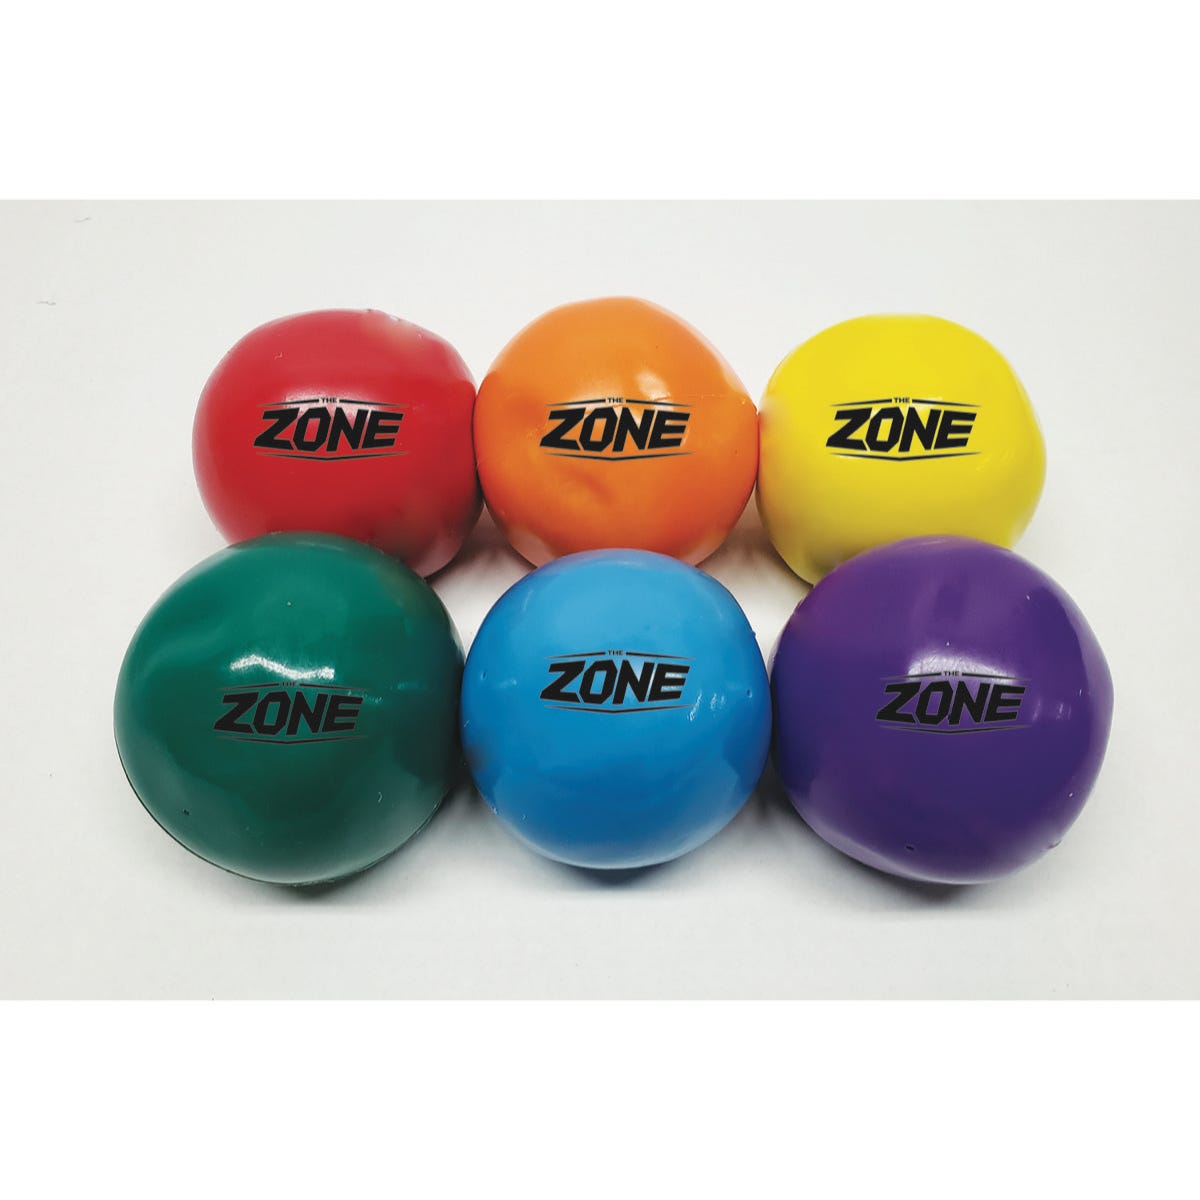 The Zone™ Pellet Balls